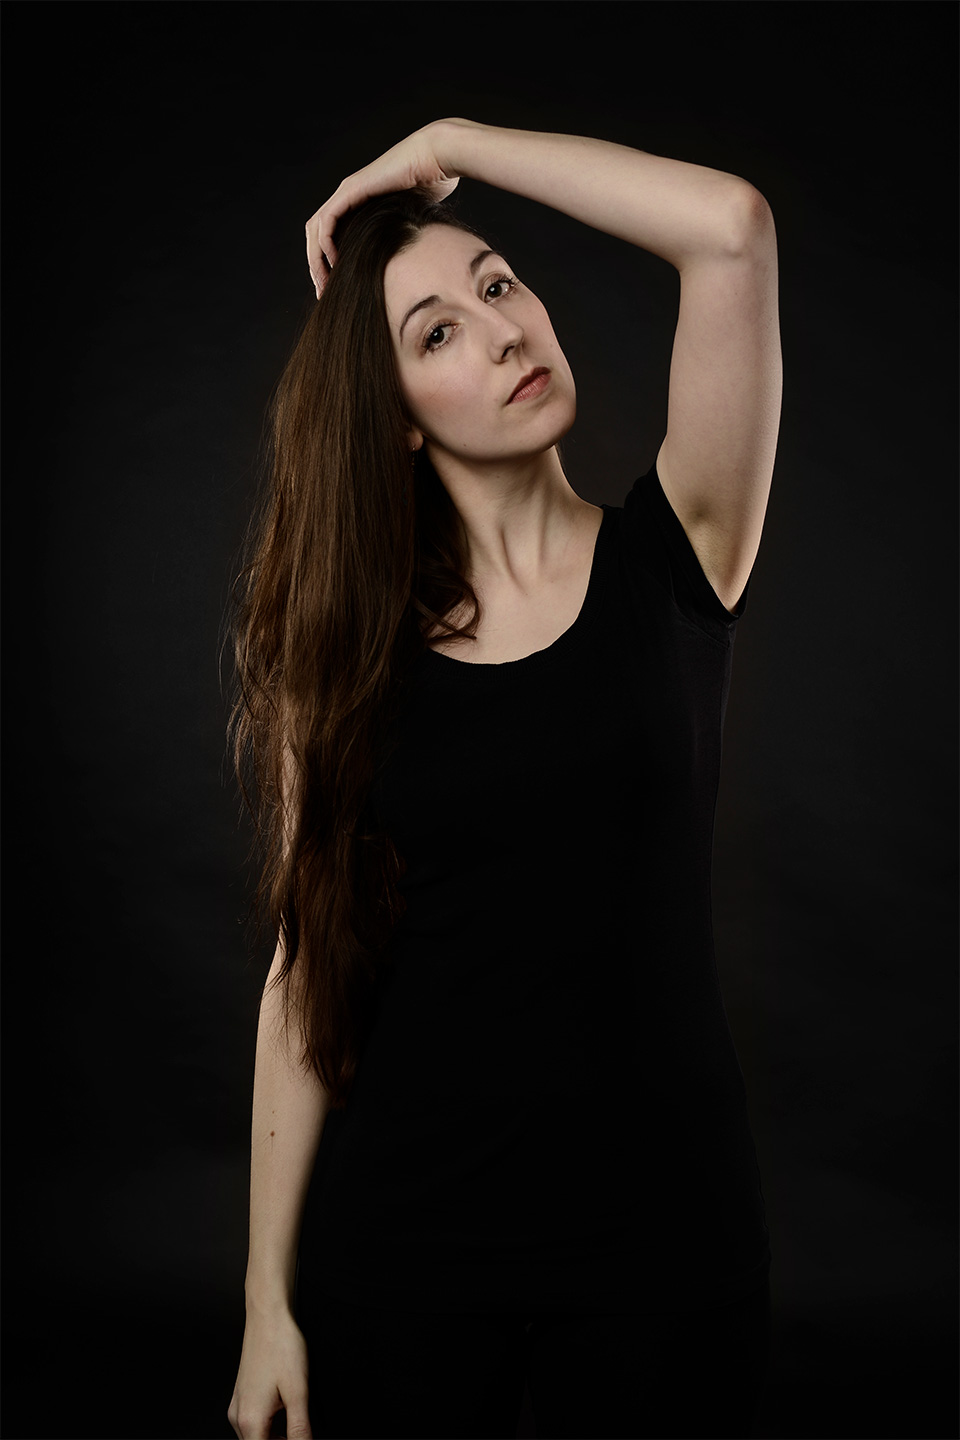 Rahel Schöppenthau, wearing a black top, one hand touches her head